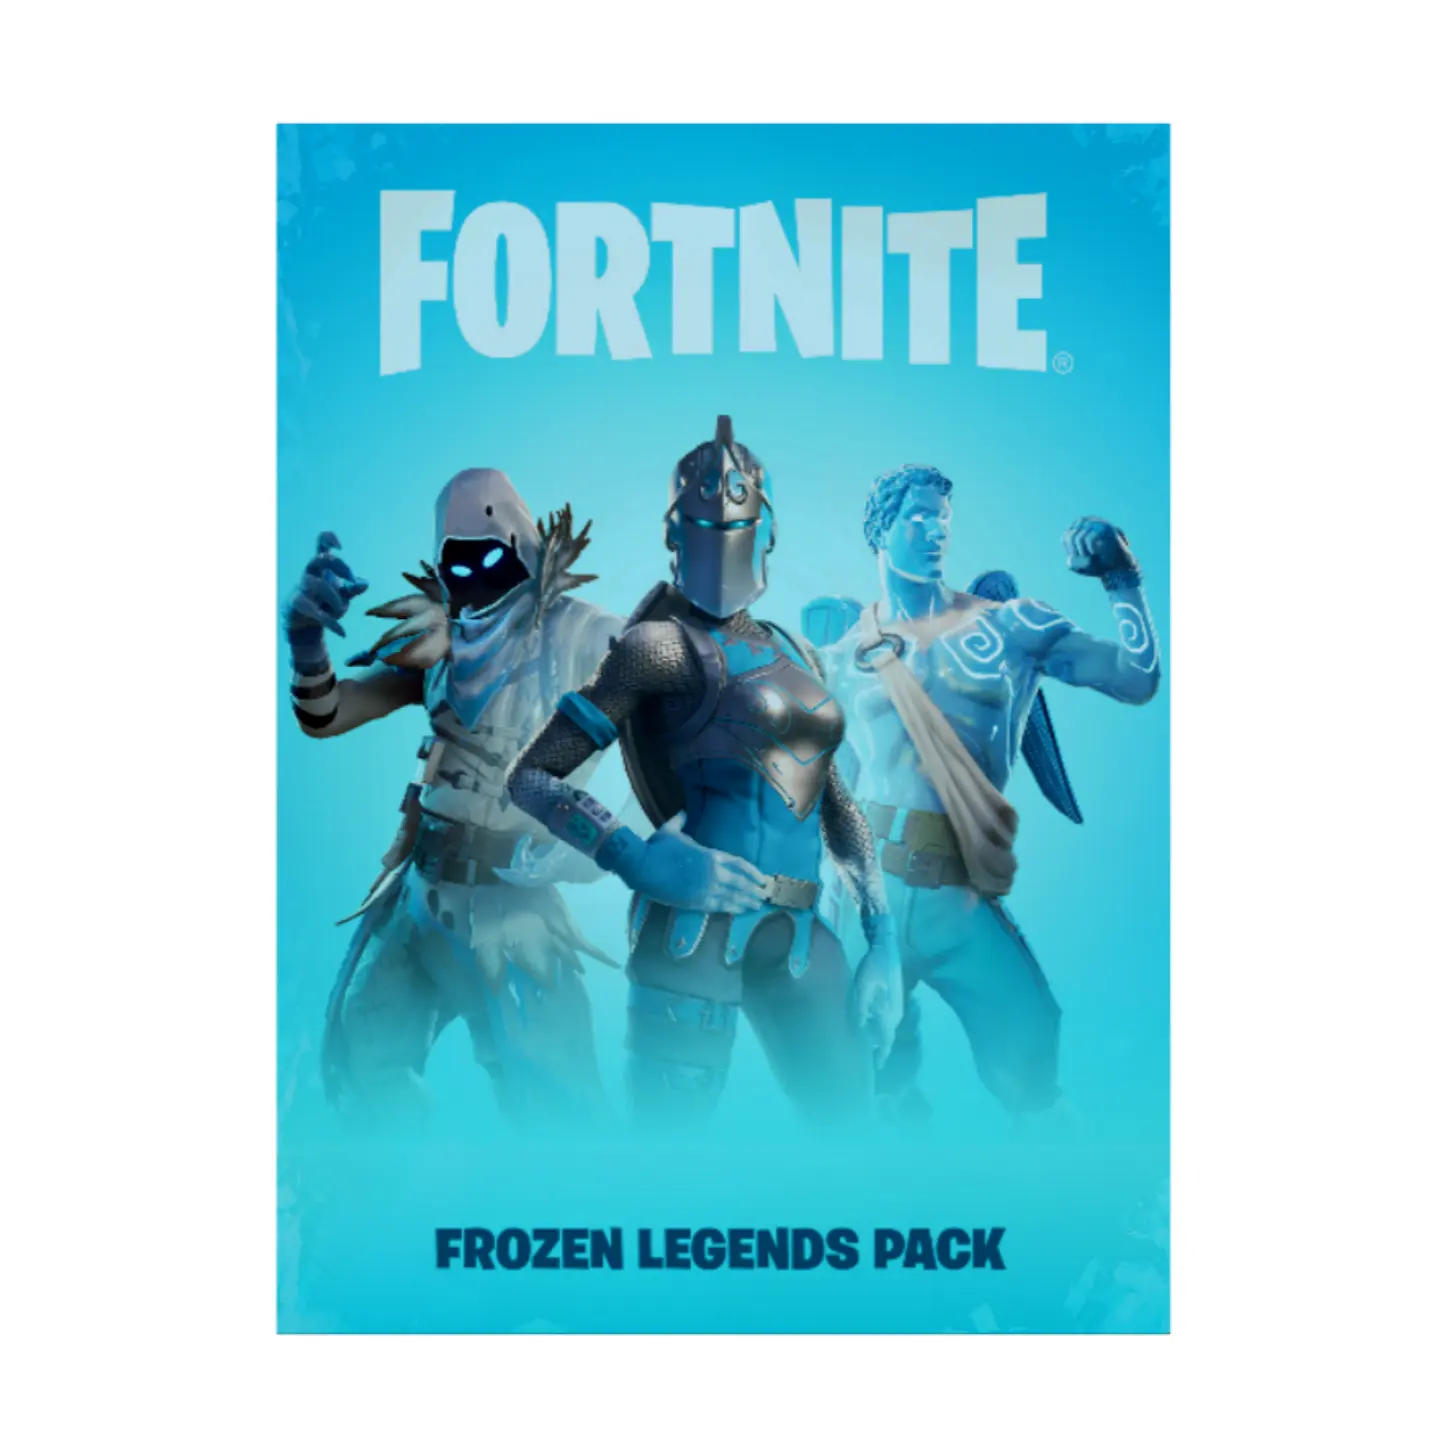 Fortniter Frozen Legends Pack Gift Card - Epic Games Store Pack hanya perlu $12.99 Beli Fortniter Frozen Legends Pack Online